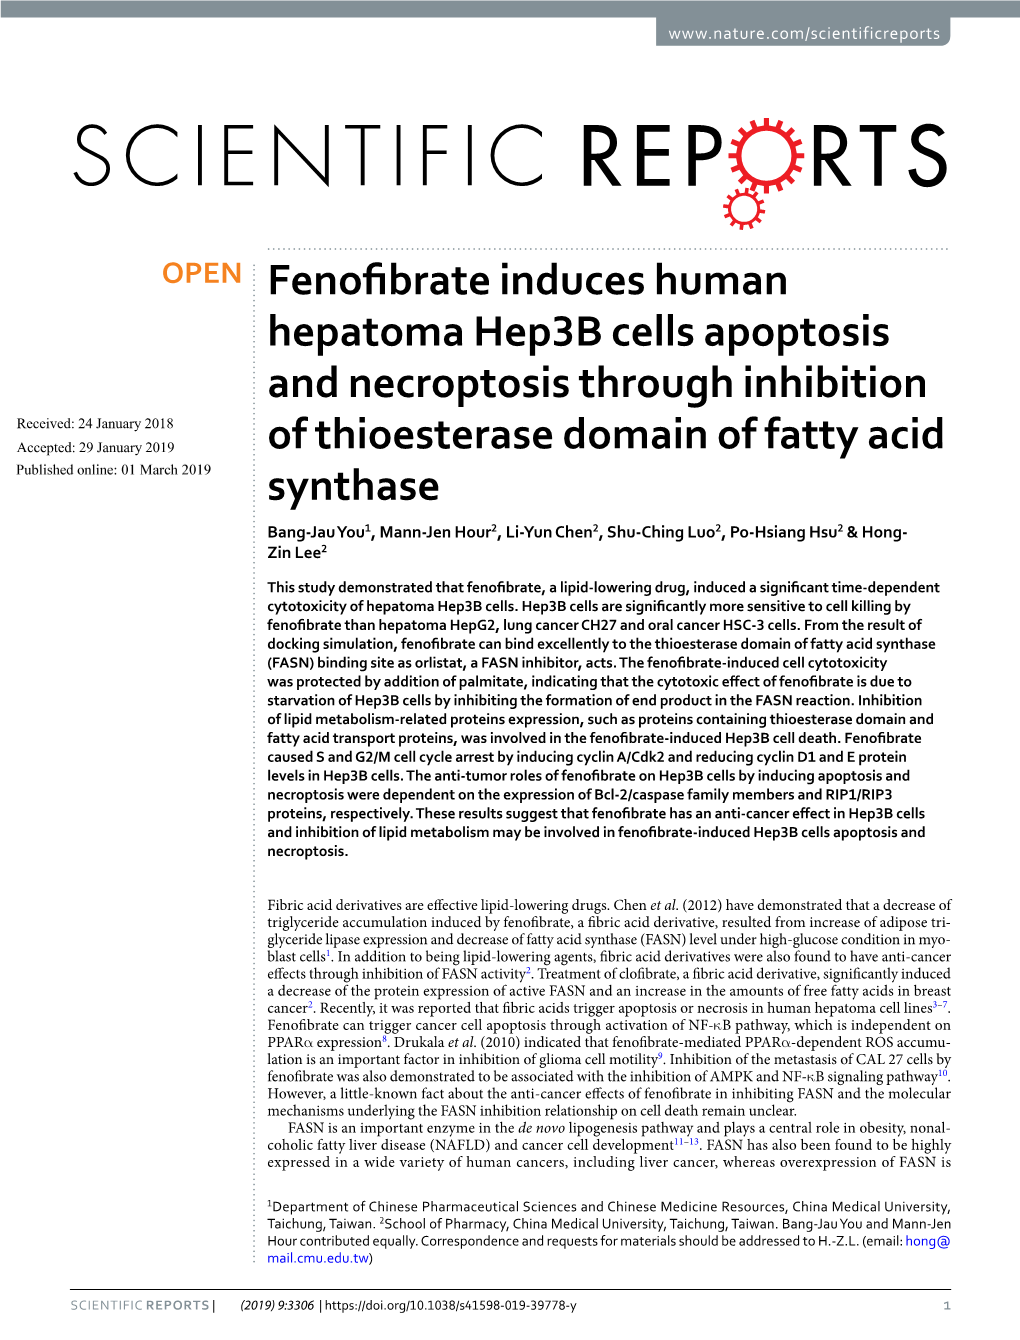 Fenofibrate Induces Human Hepatoma Hep3b Cells Apoptosis And